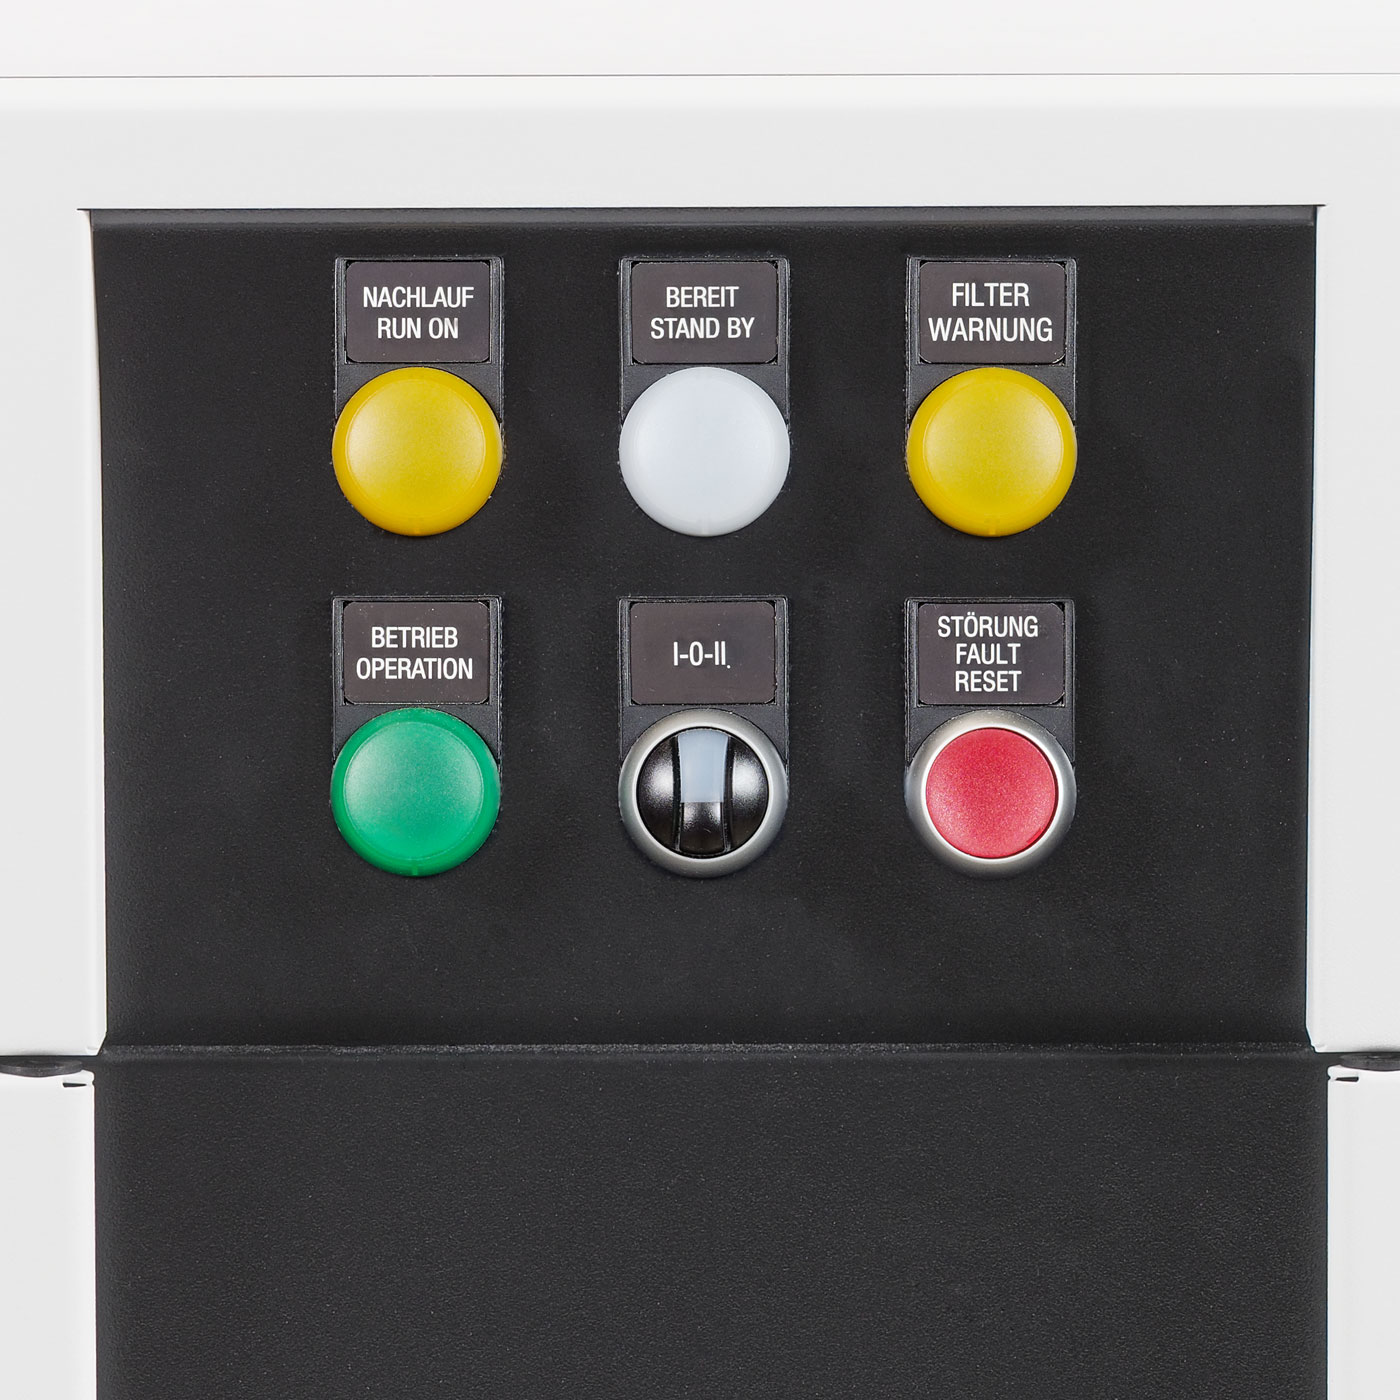 Kontrol panelinin arkasındaki entegre kontrol panosu